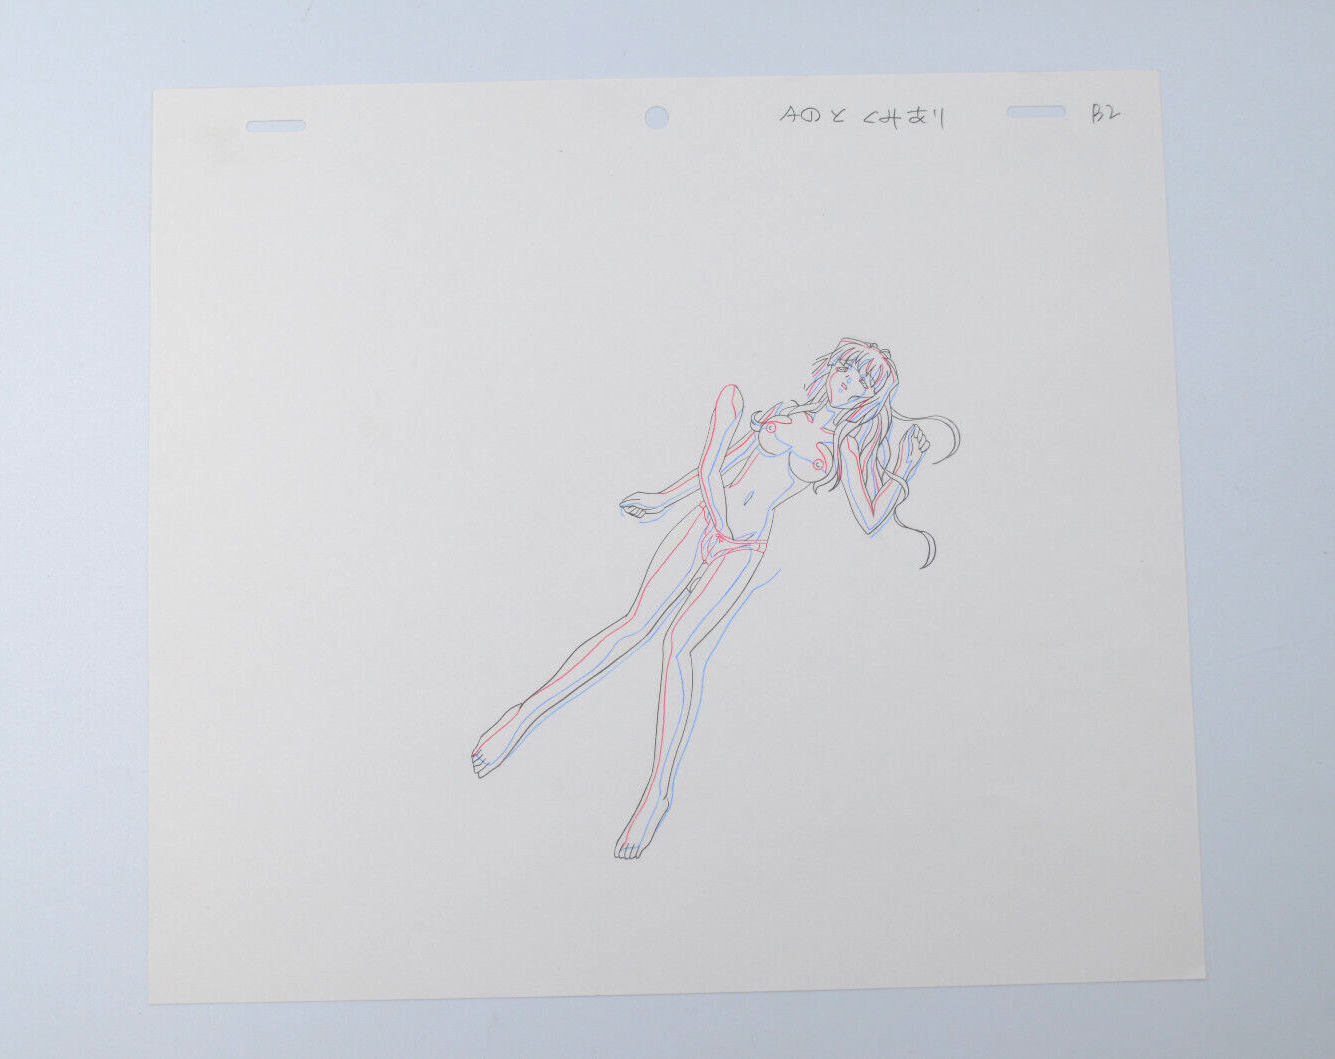 Original Moonlight Lady Episode 1 OAV 2001 Anime Production Art Pencil Douga Cel